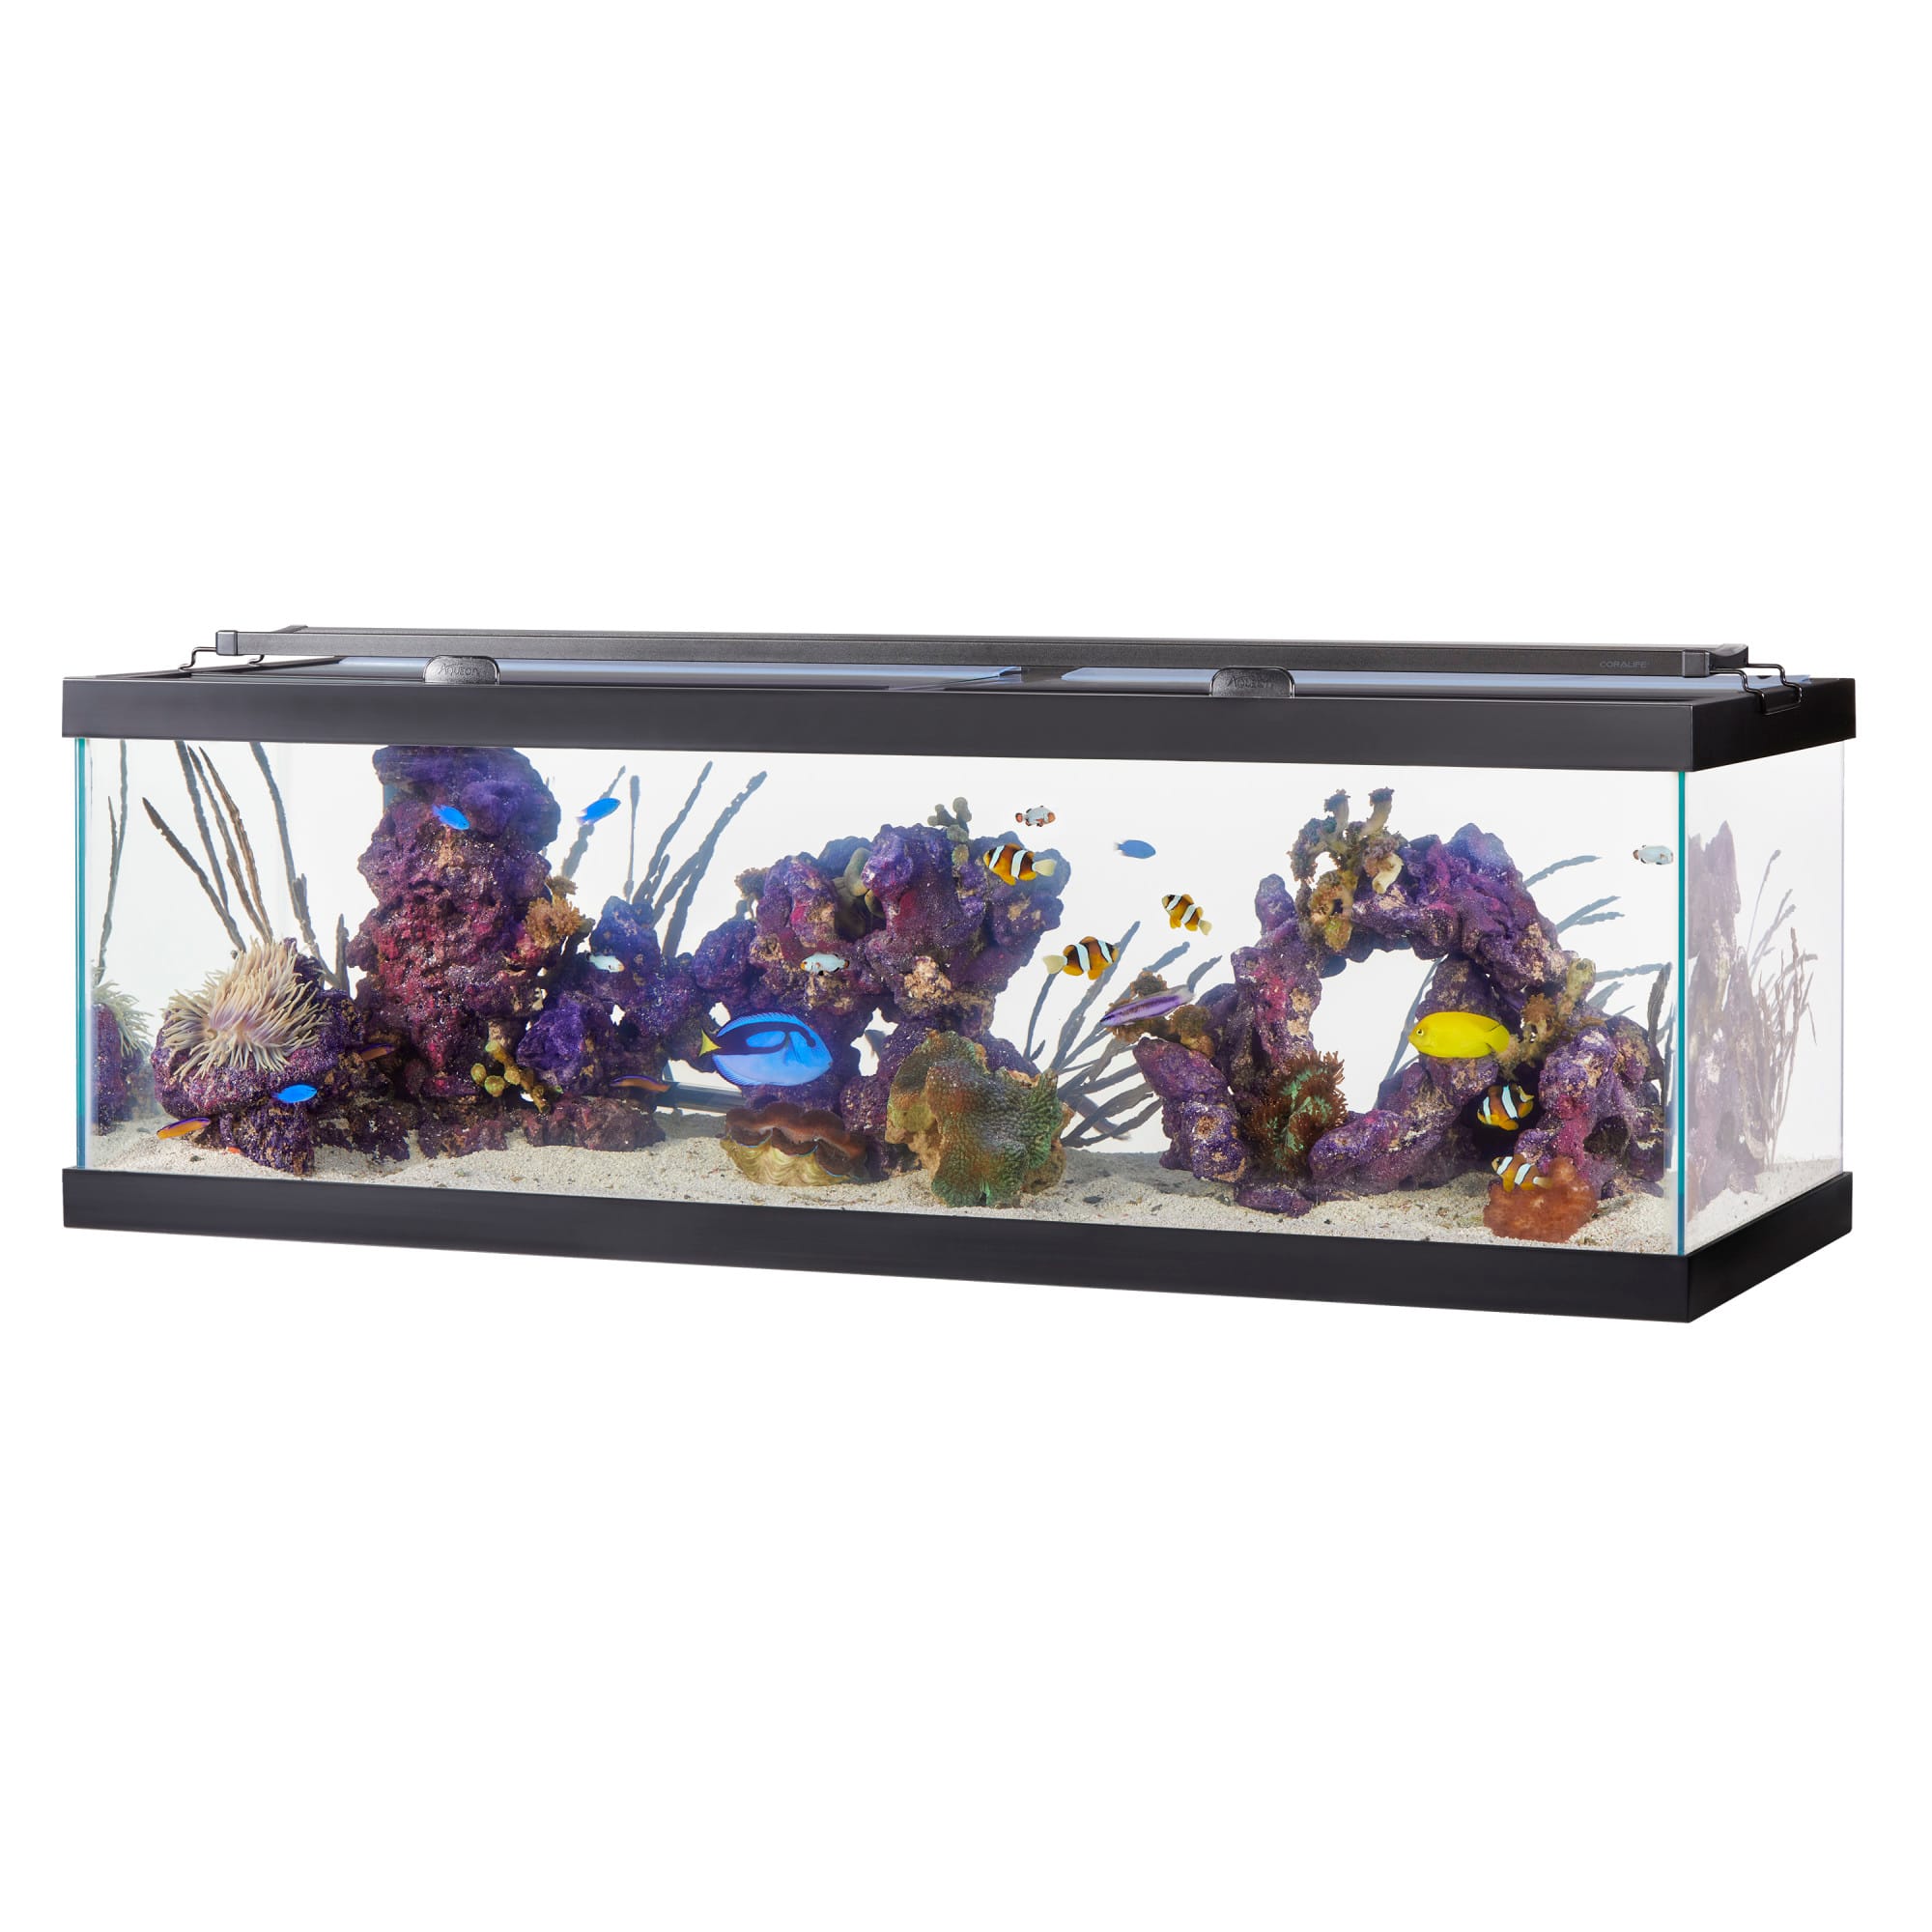 Aqueon 60 gallon aquarium Clear Silicone black 48x18x16